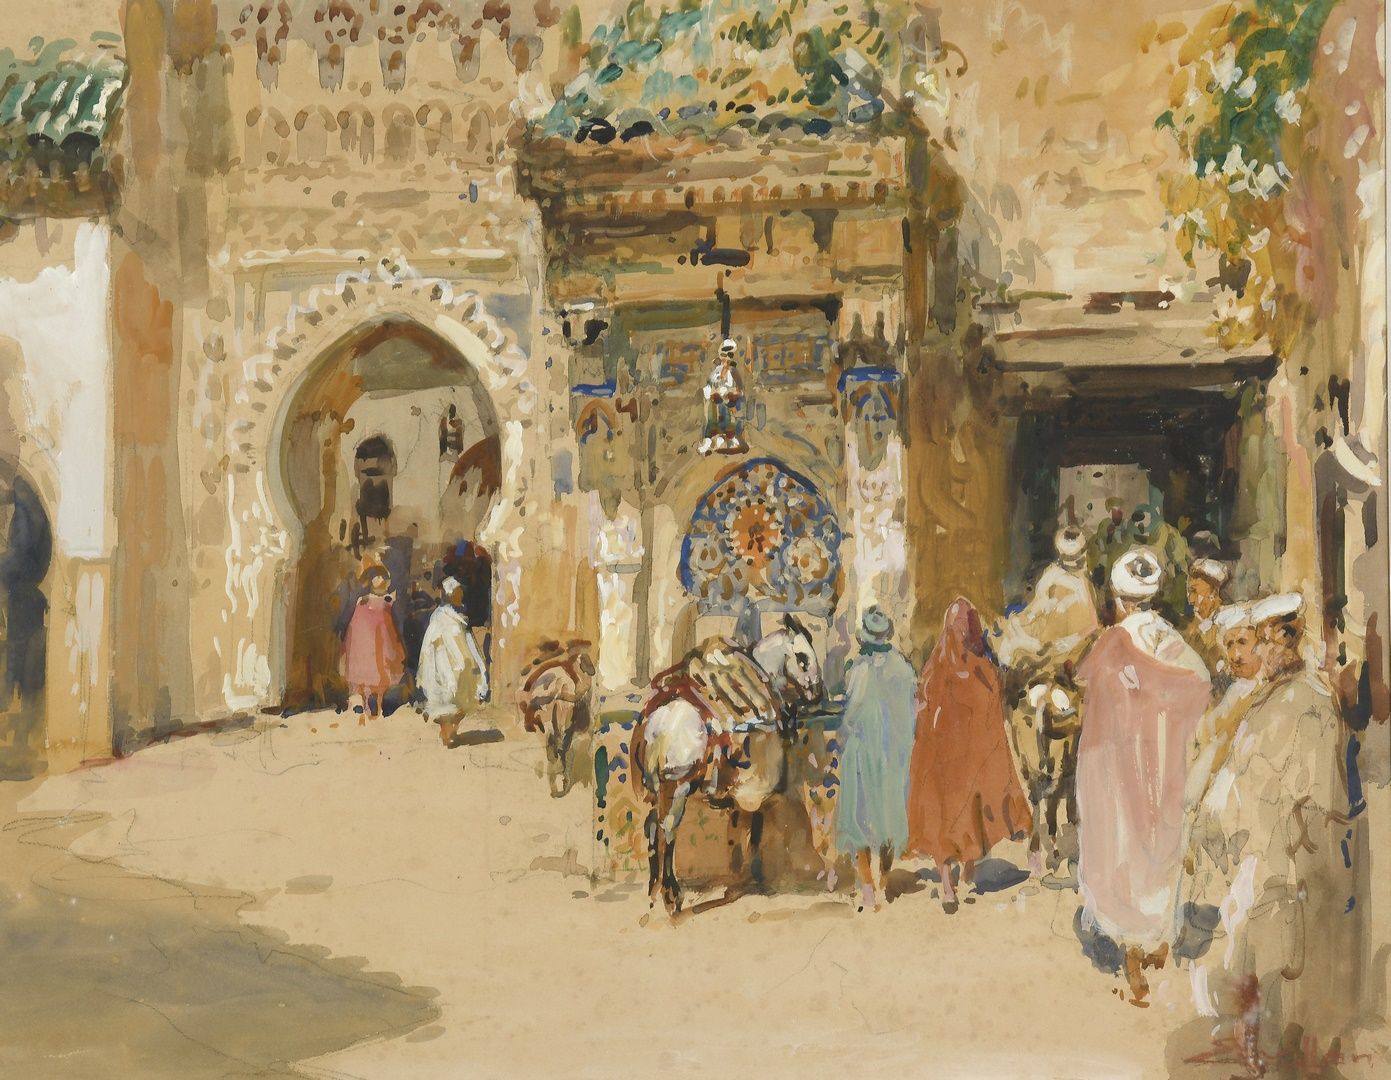 Null 尤金-维隆，1879-1951 年
城镇入口，非斯，摩洛哥 1933 年
水粉画（模印痕迹），右下方有签名，裱褙上有位置和日期
43.5 x 56 厘&hellip;